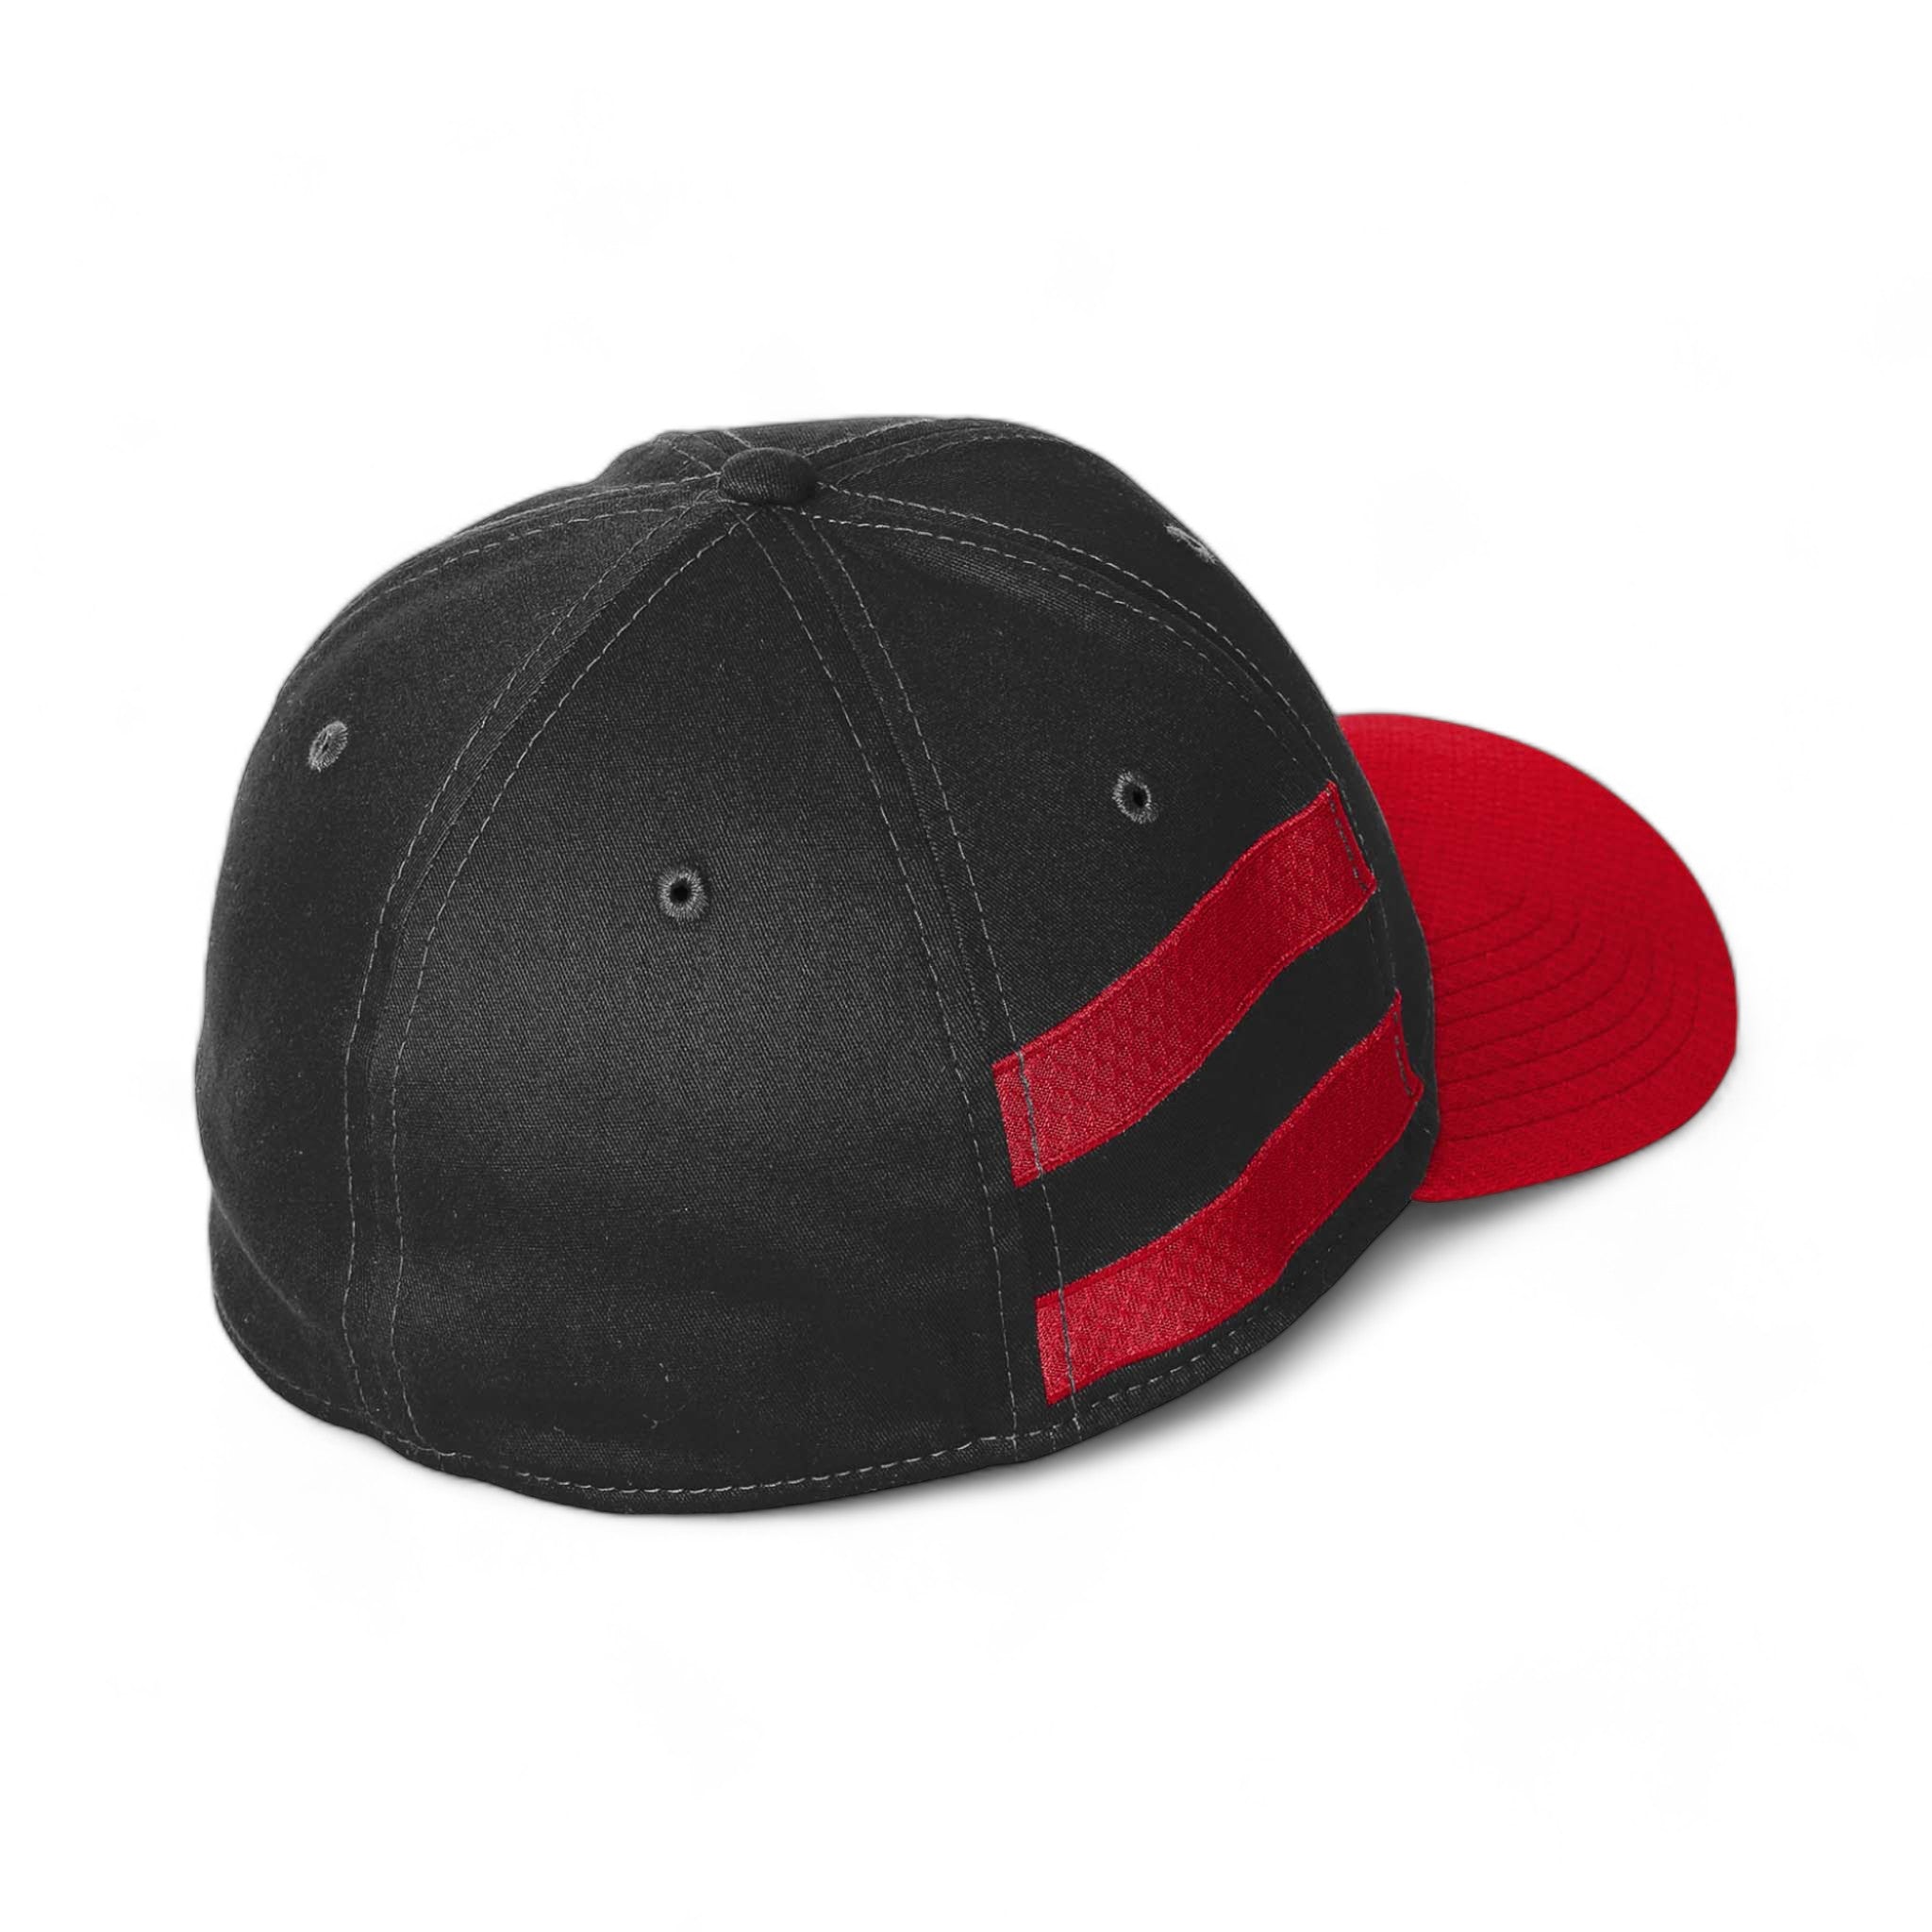 Back view of New Era NE1122 custom hat in black and scarlet